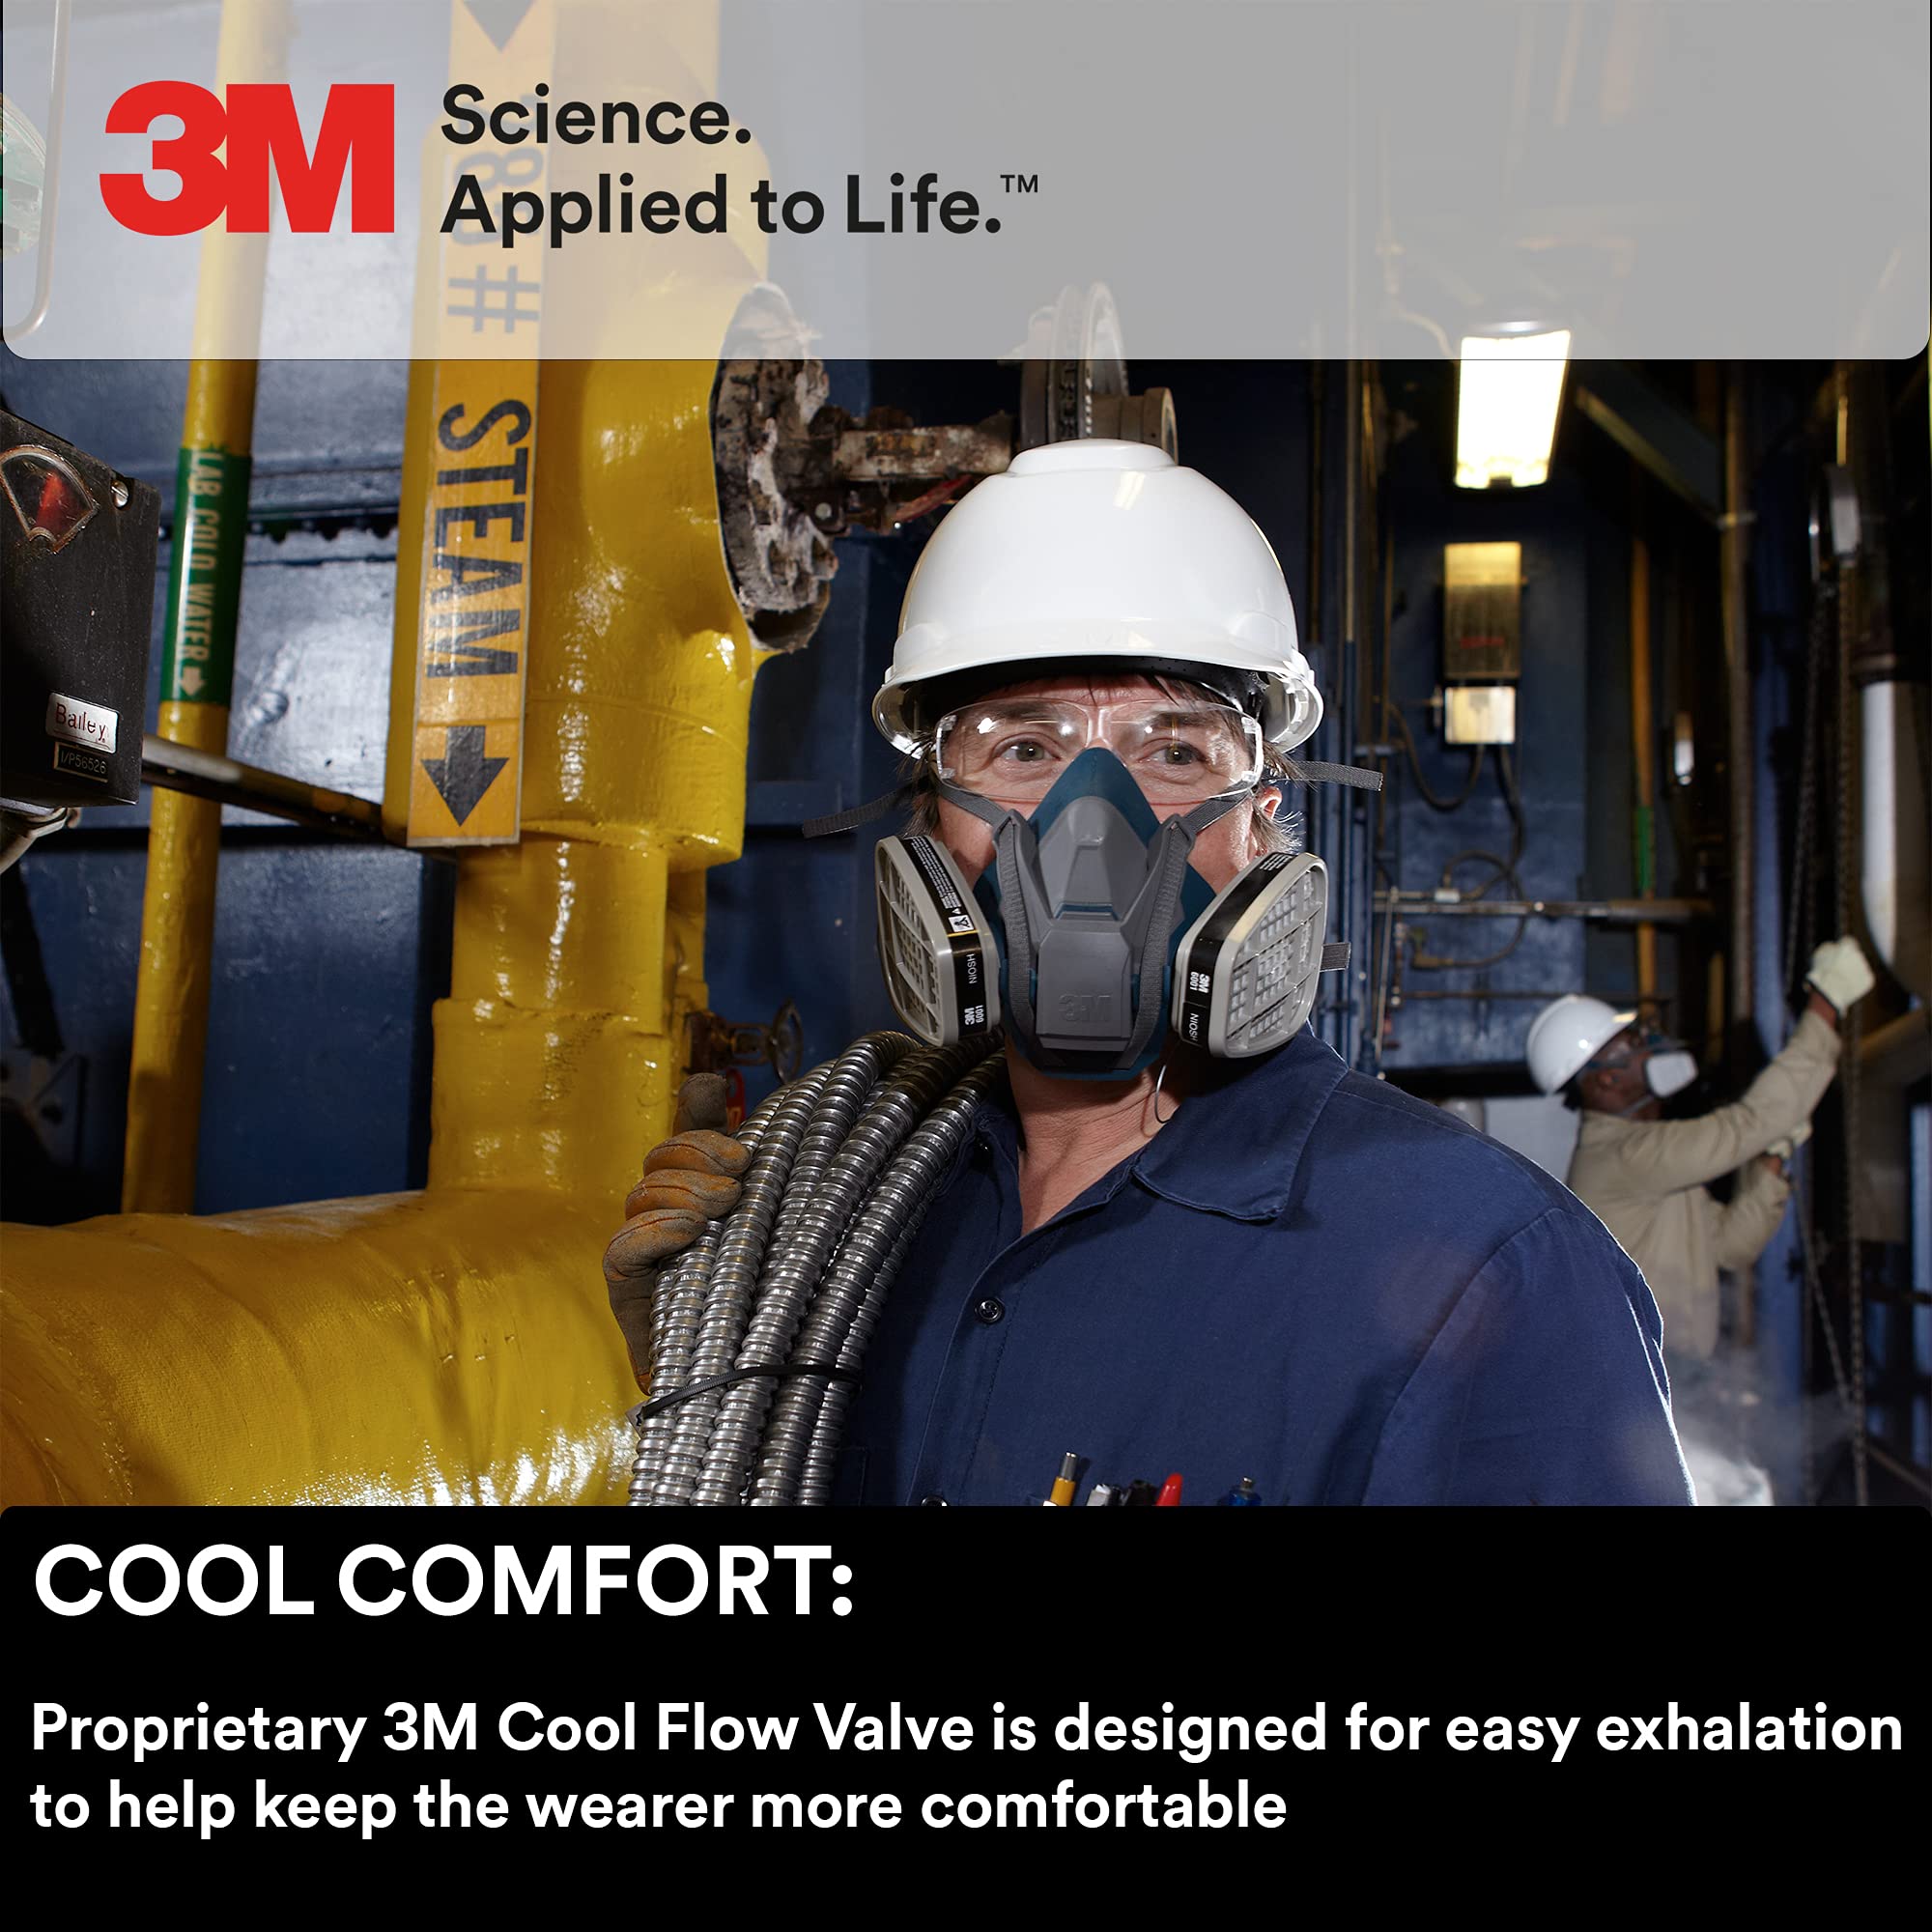 3M Rugged Comfort Quick Latch Half Facepiece Reusable Respirator 6502QL, Gases, Vapors, Dust